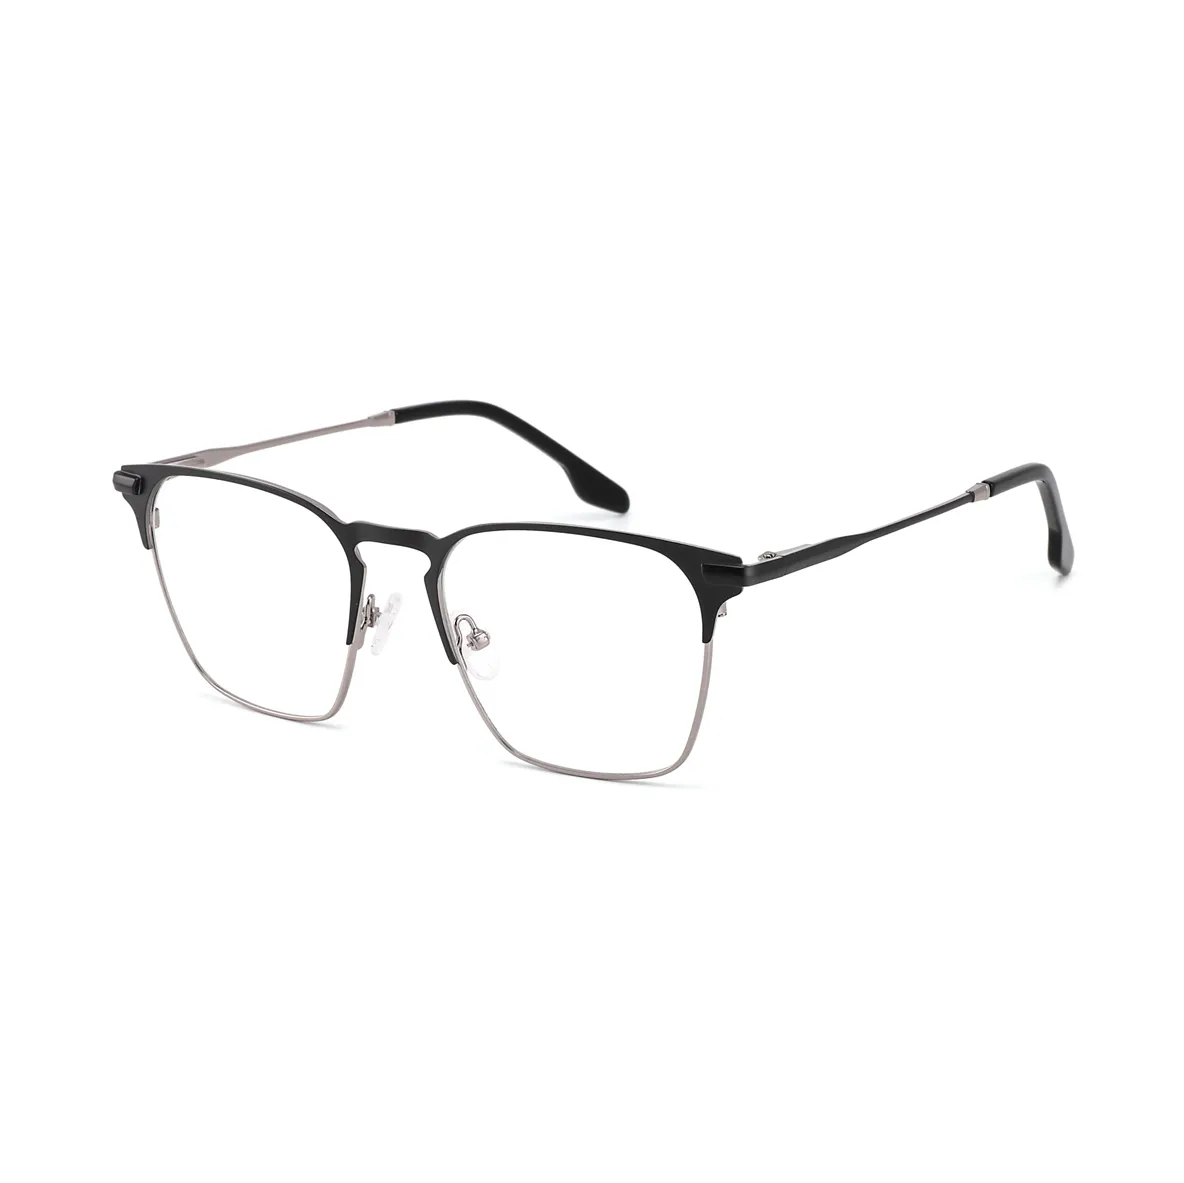 2022 High Quality Square Full Rim Black Metal Spectacle Glasses Frame For Men And Women